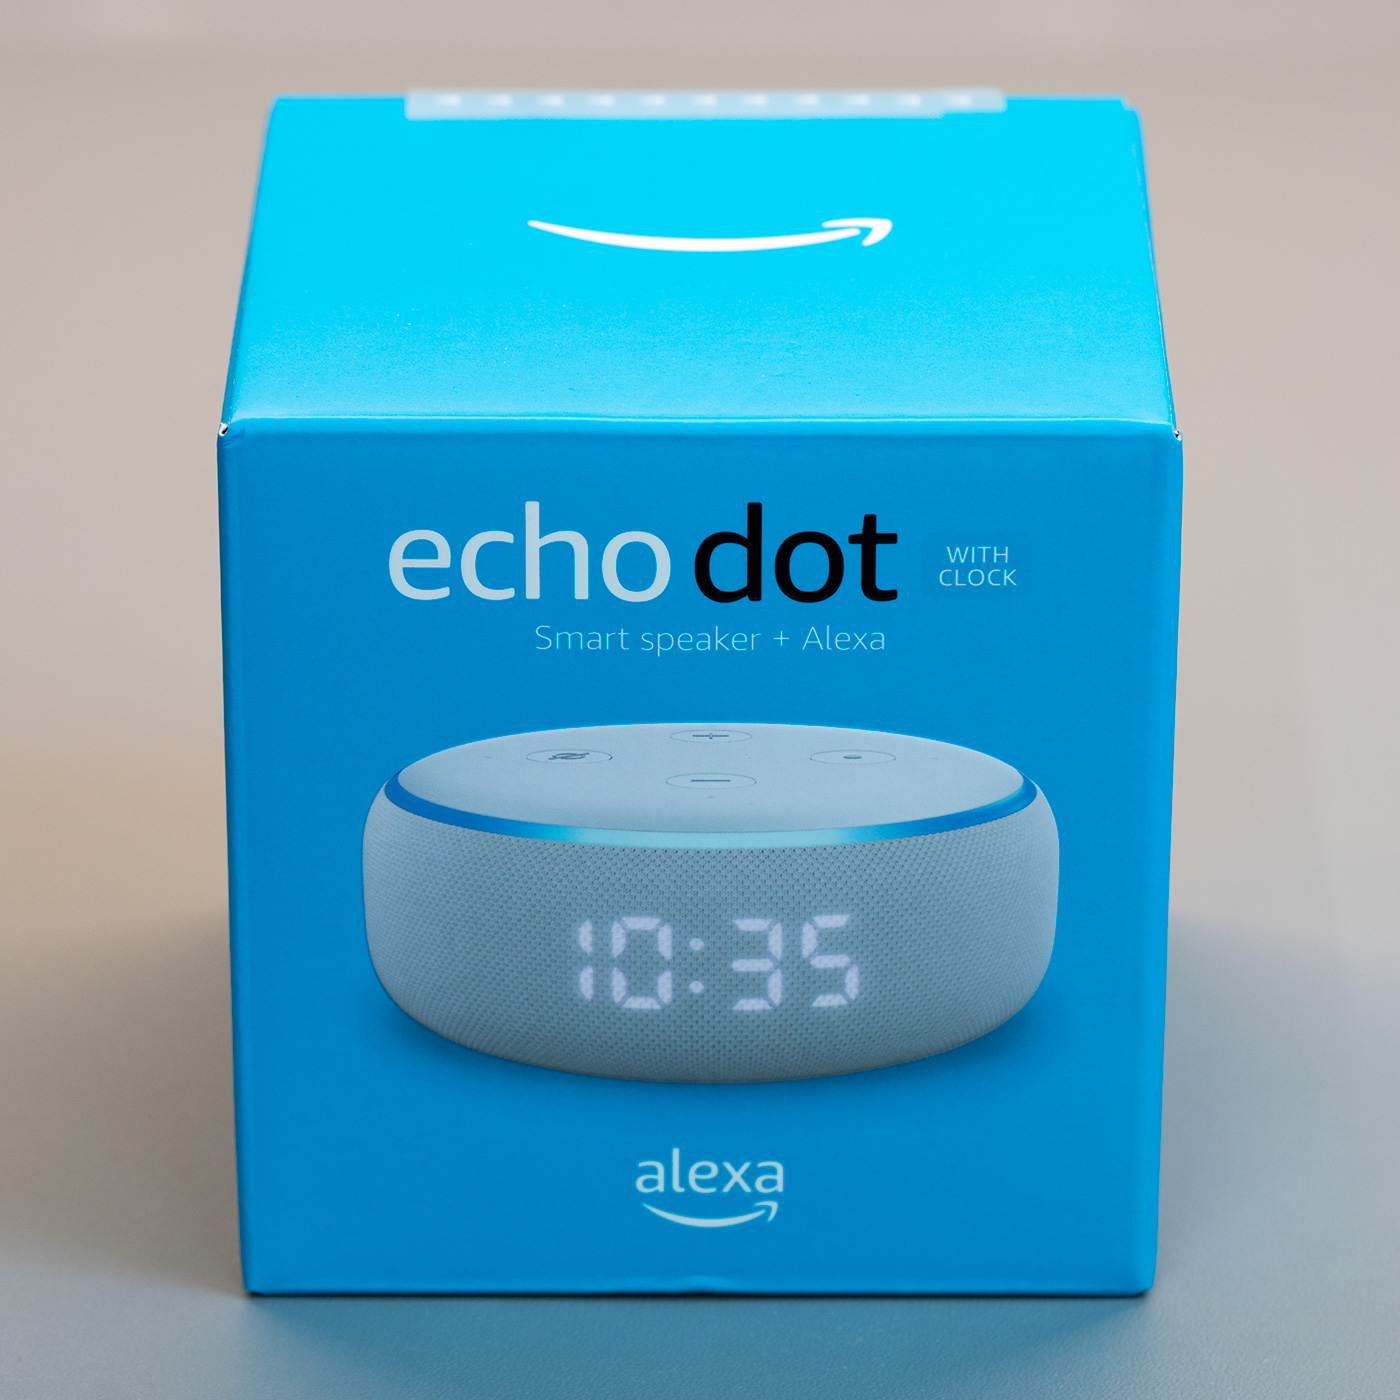 Echo 3rd Generation - Smart Speaker with Alexa